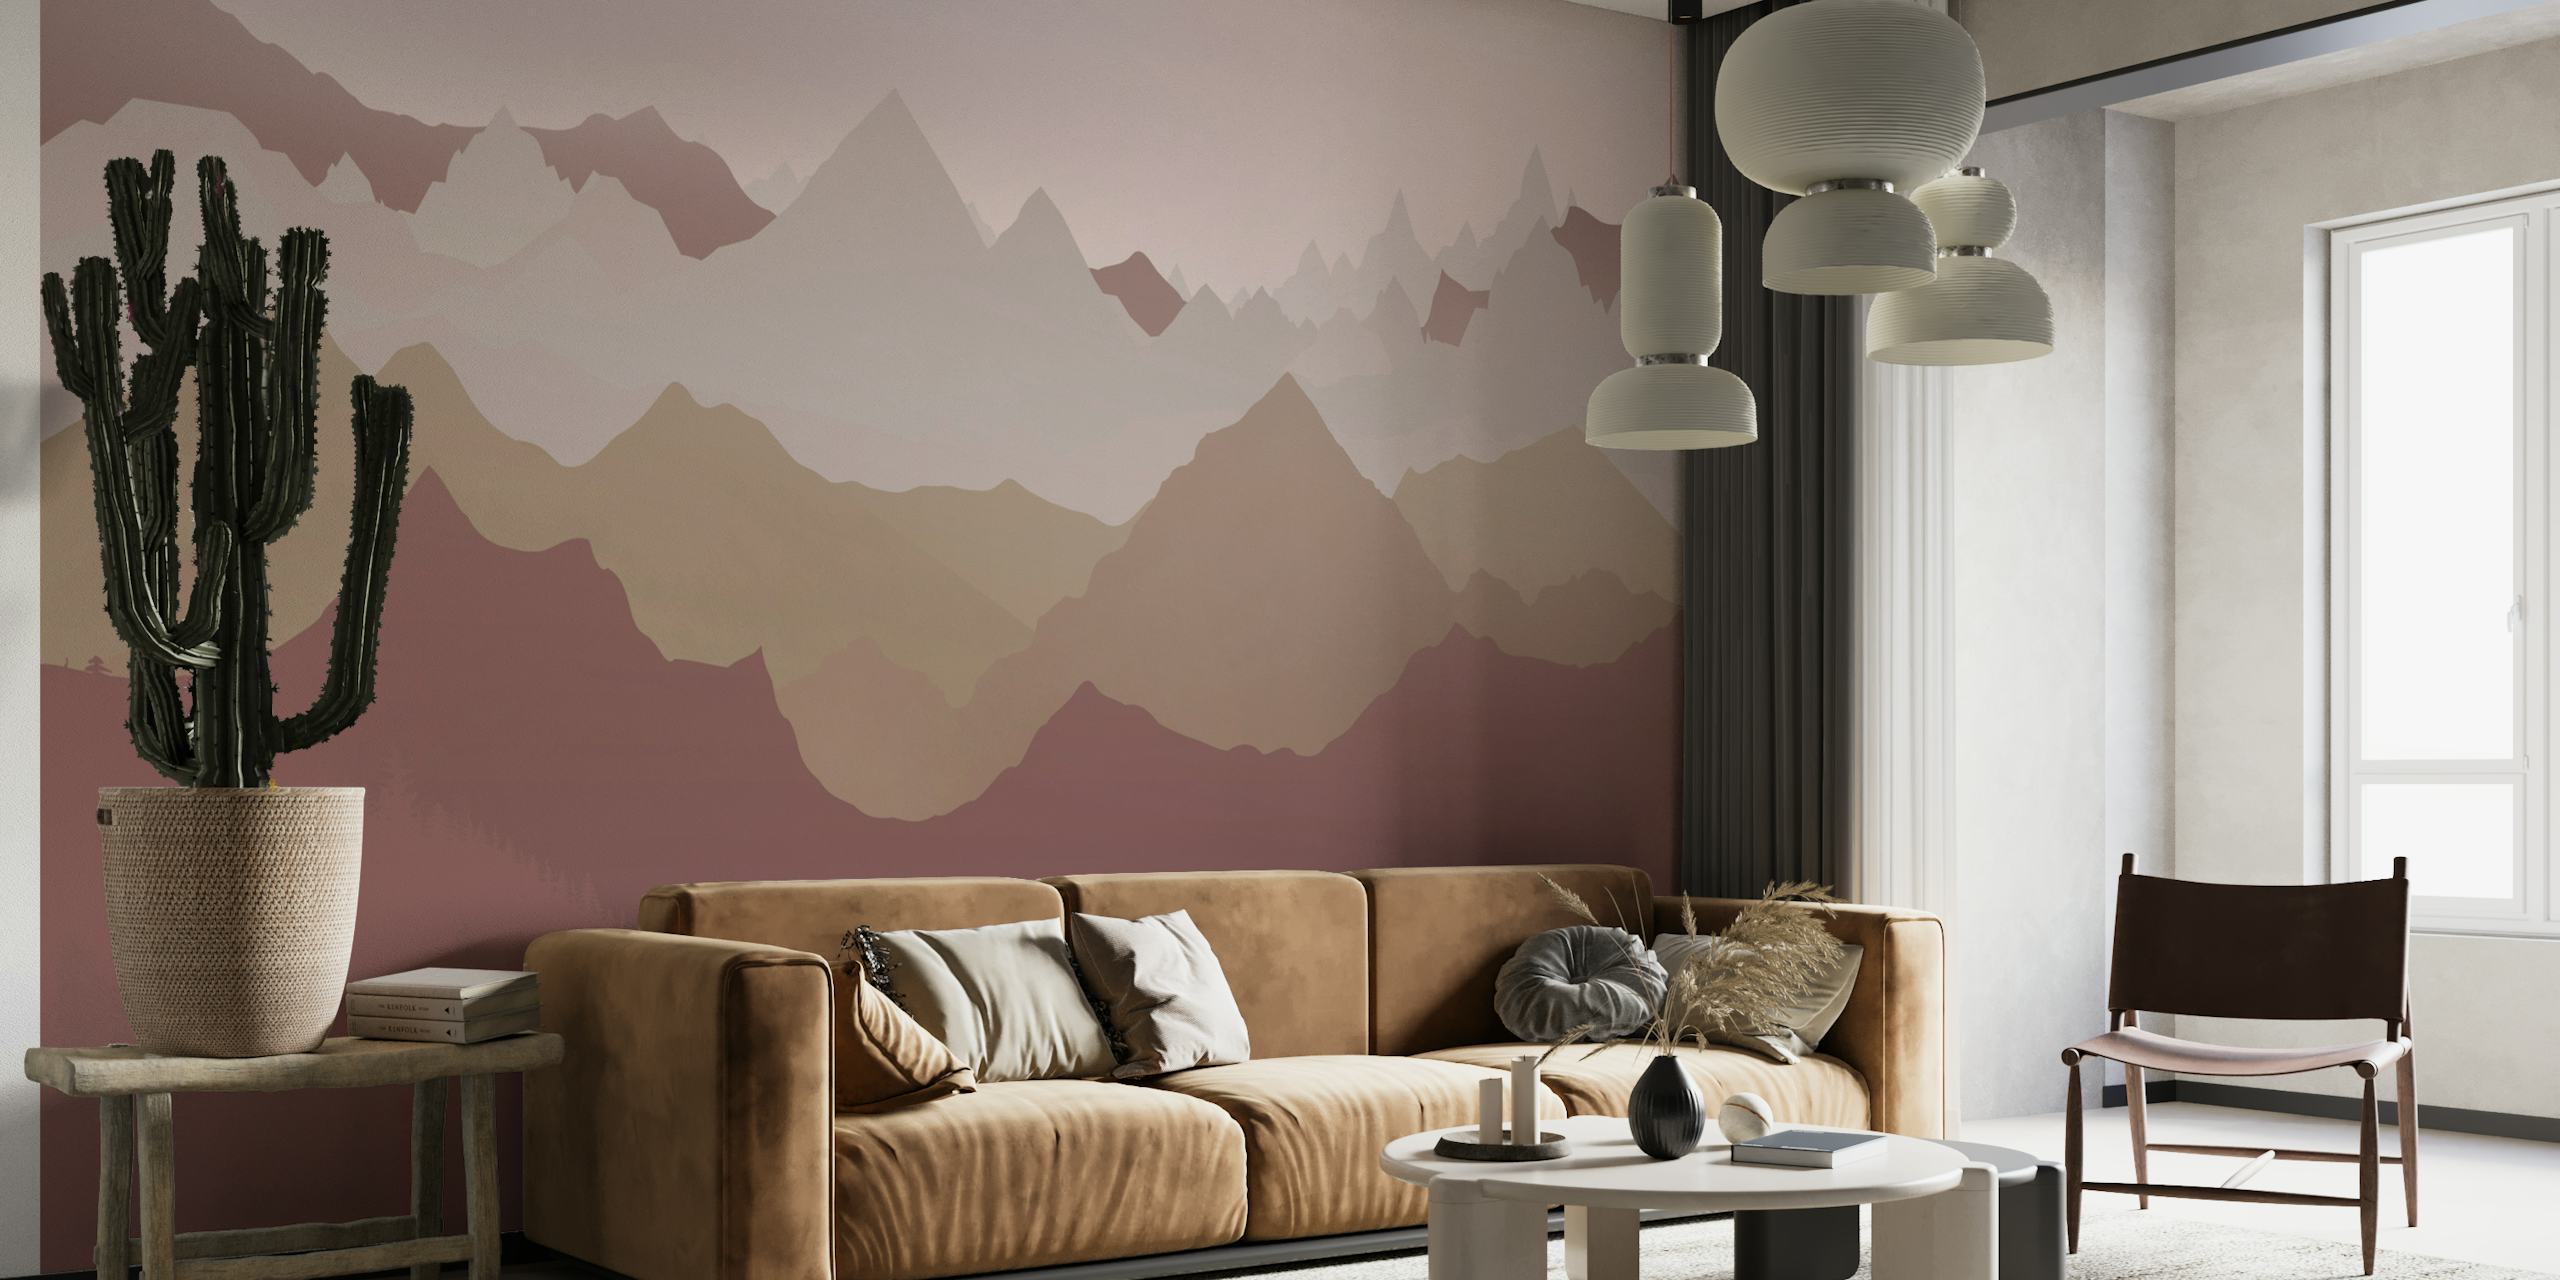 Stylized ocher and beige mountain peaks wall mural on a dusty rose background